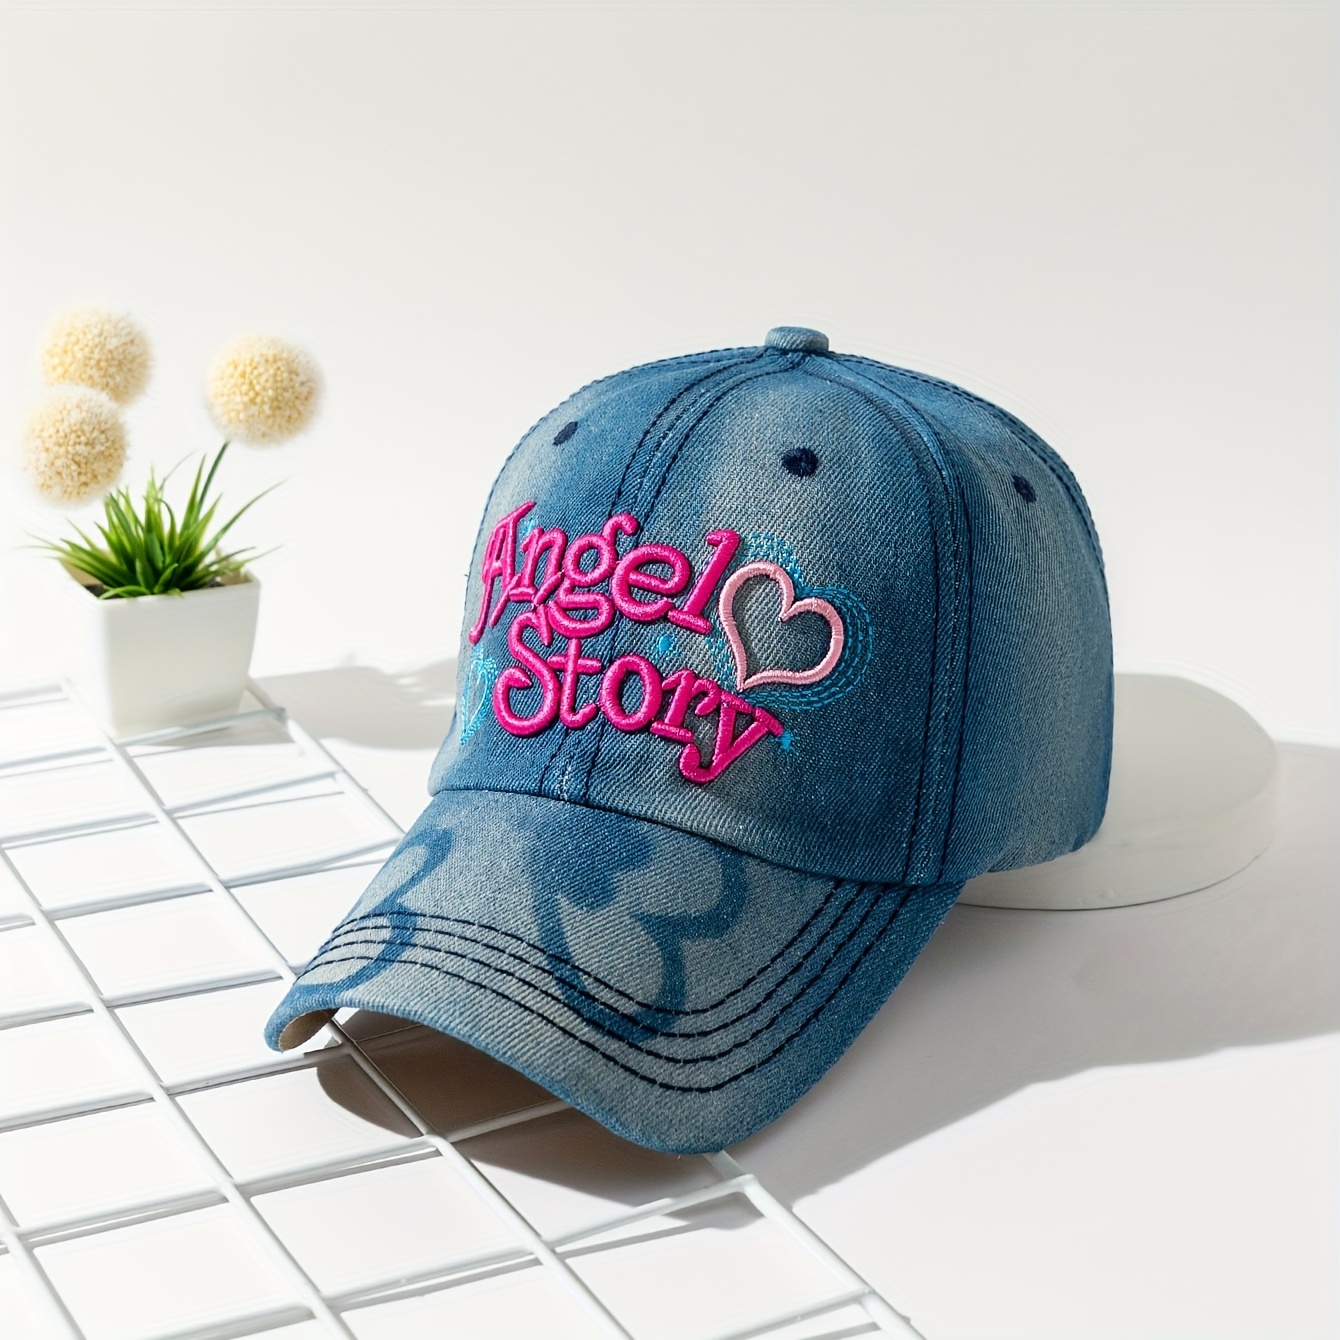 Wings Letter Embroidered Baseball Solid Color Hip Hop Breathable Snapback Hats Lightweight Adjustable Dad Hat For Women Men